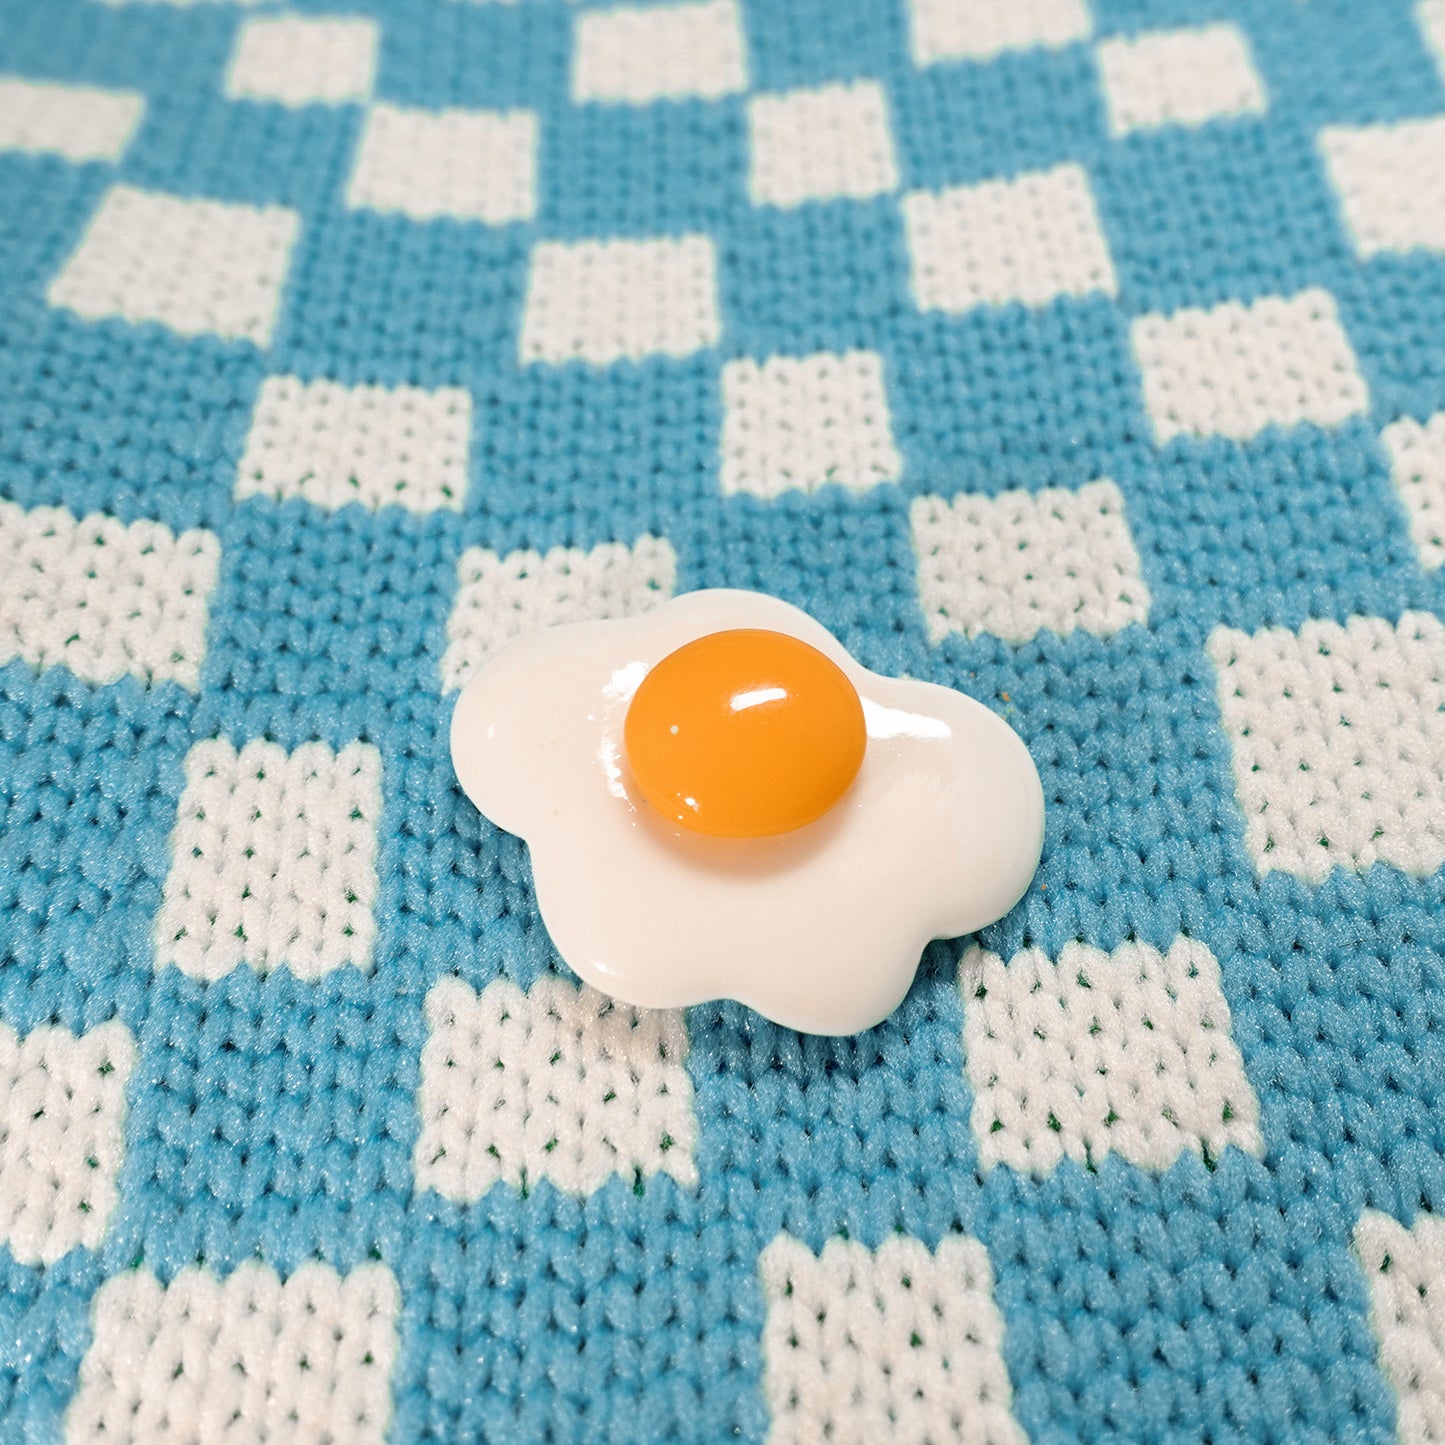 Miniature Fried Egg Pin